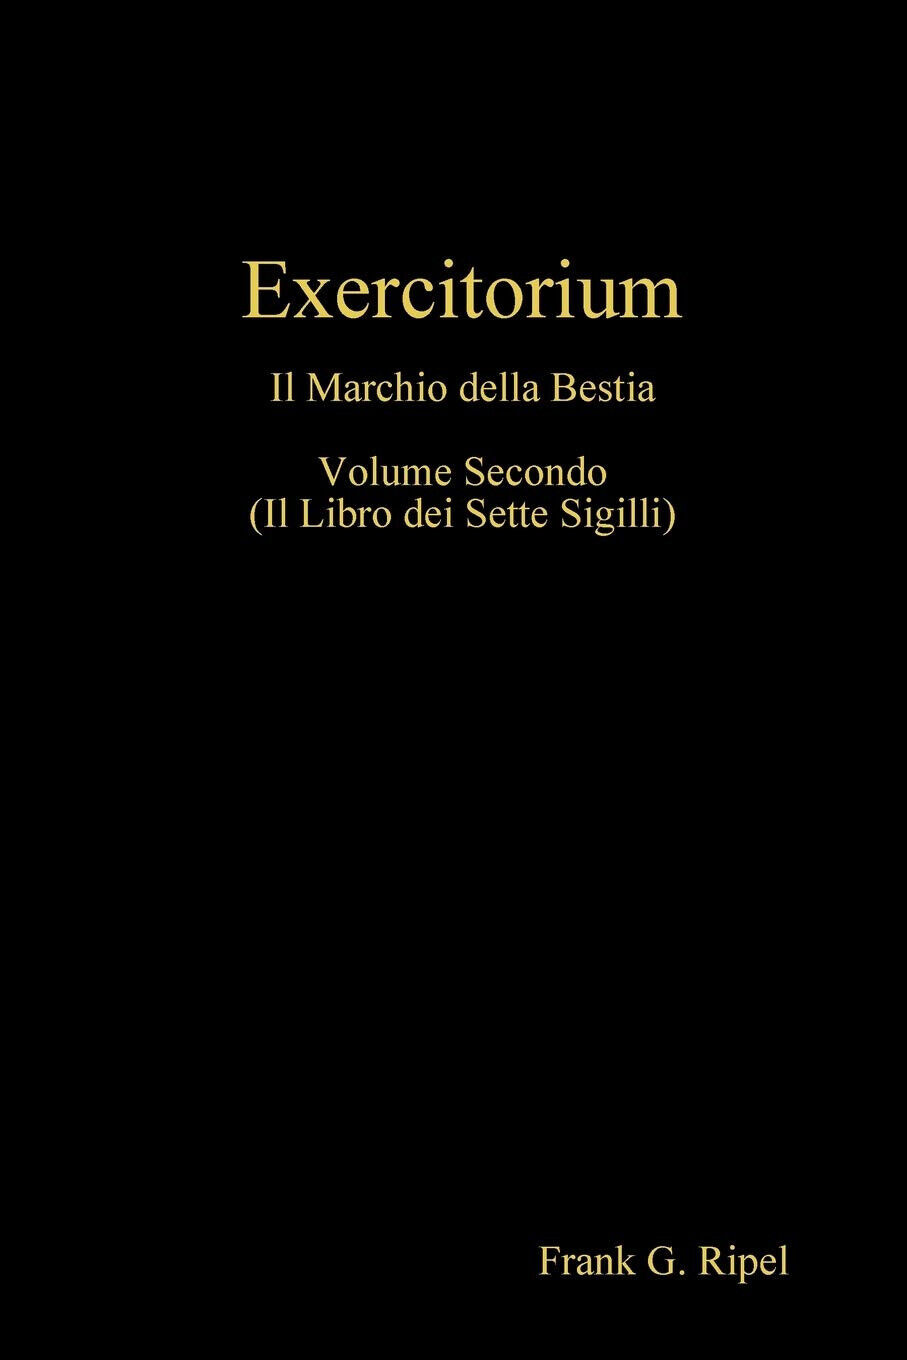 Exercitorium vol2 - Frank G. Ripel - Lulu.com, 2019